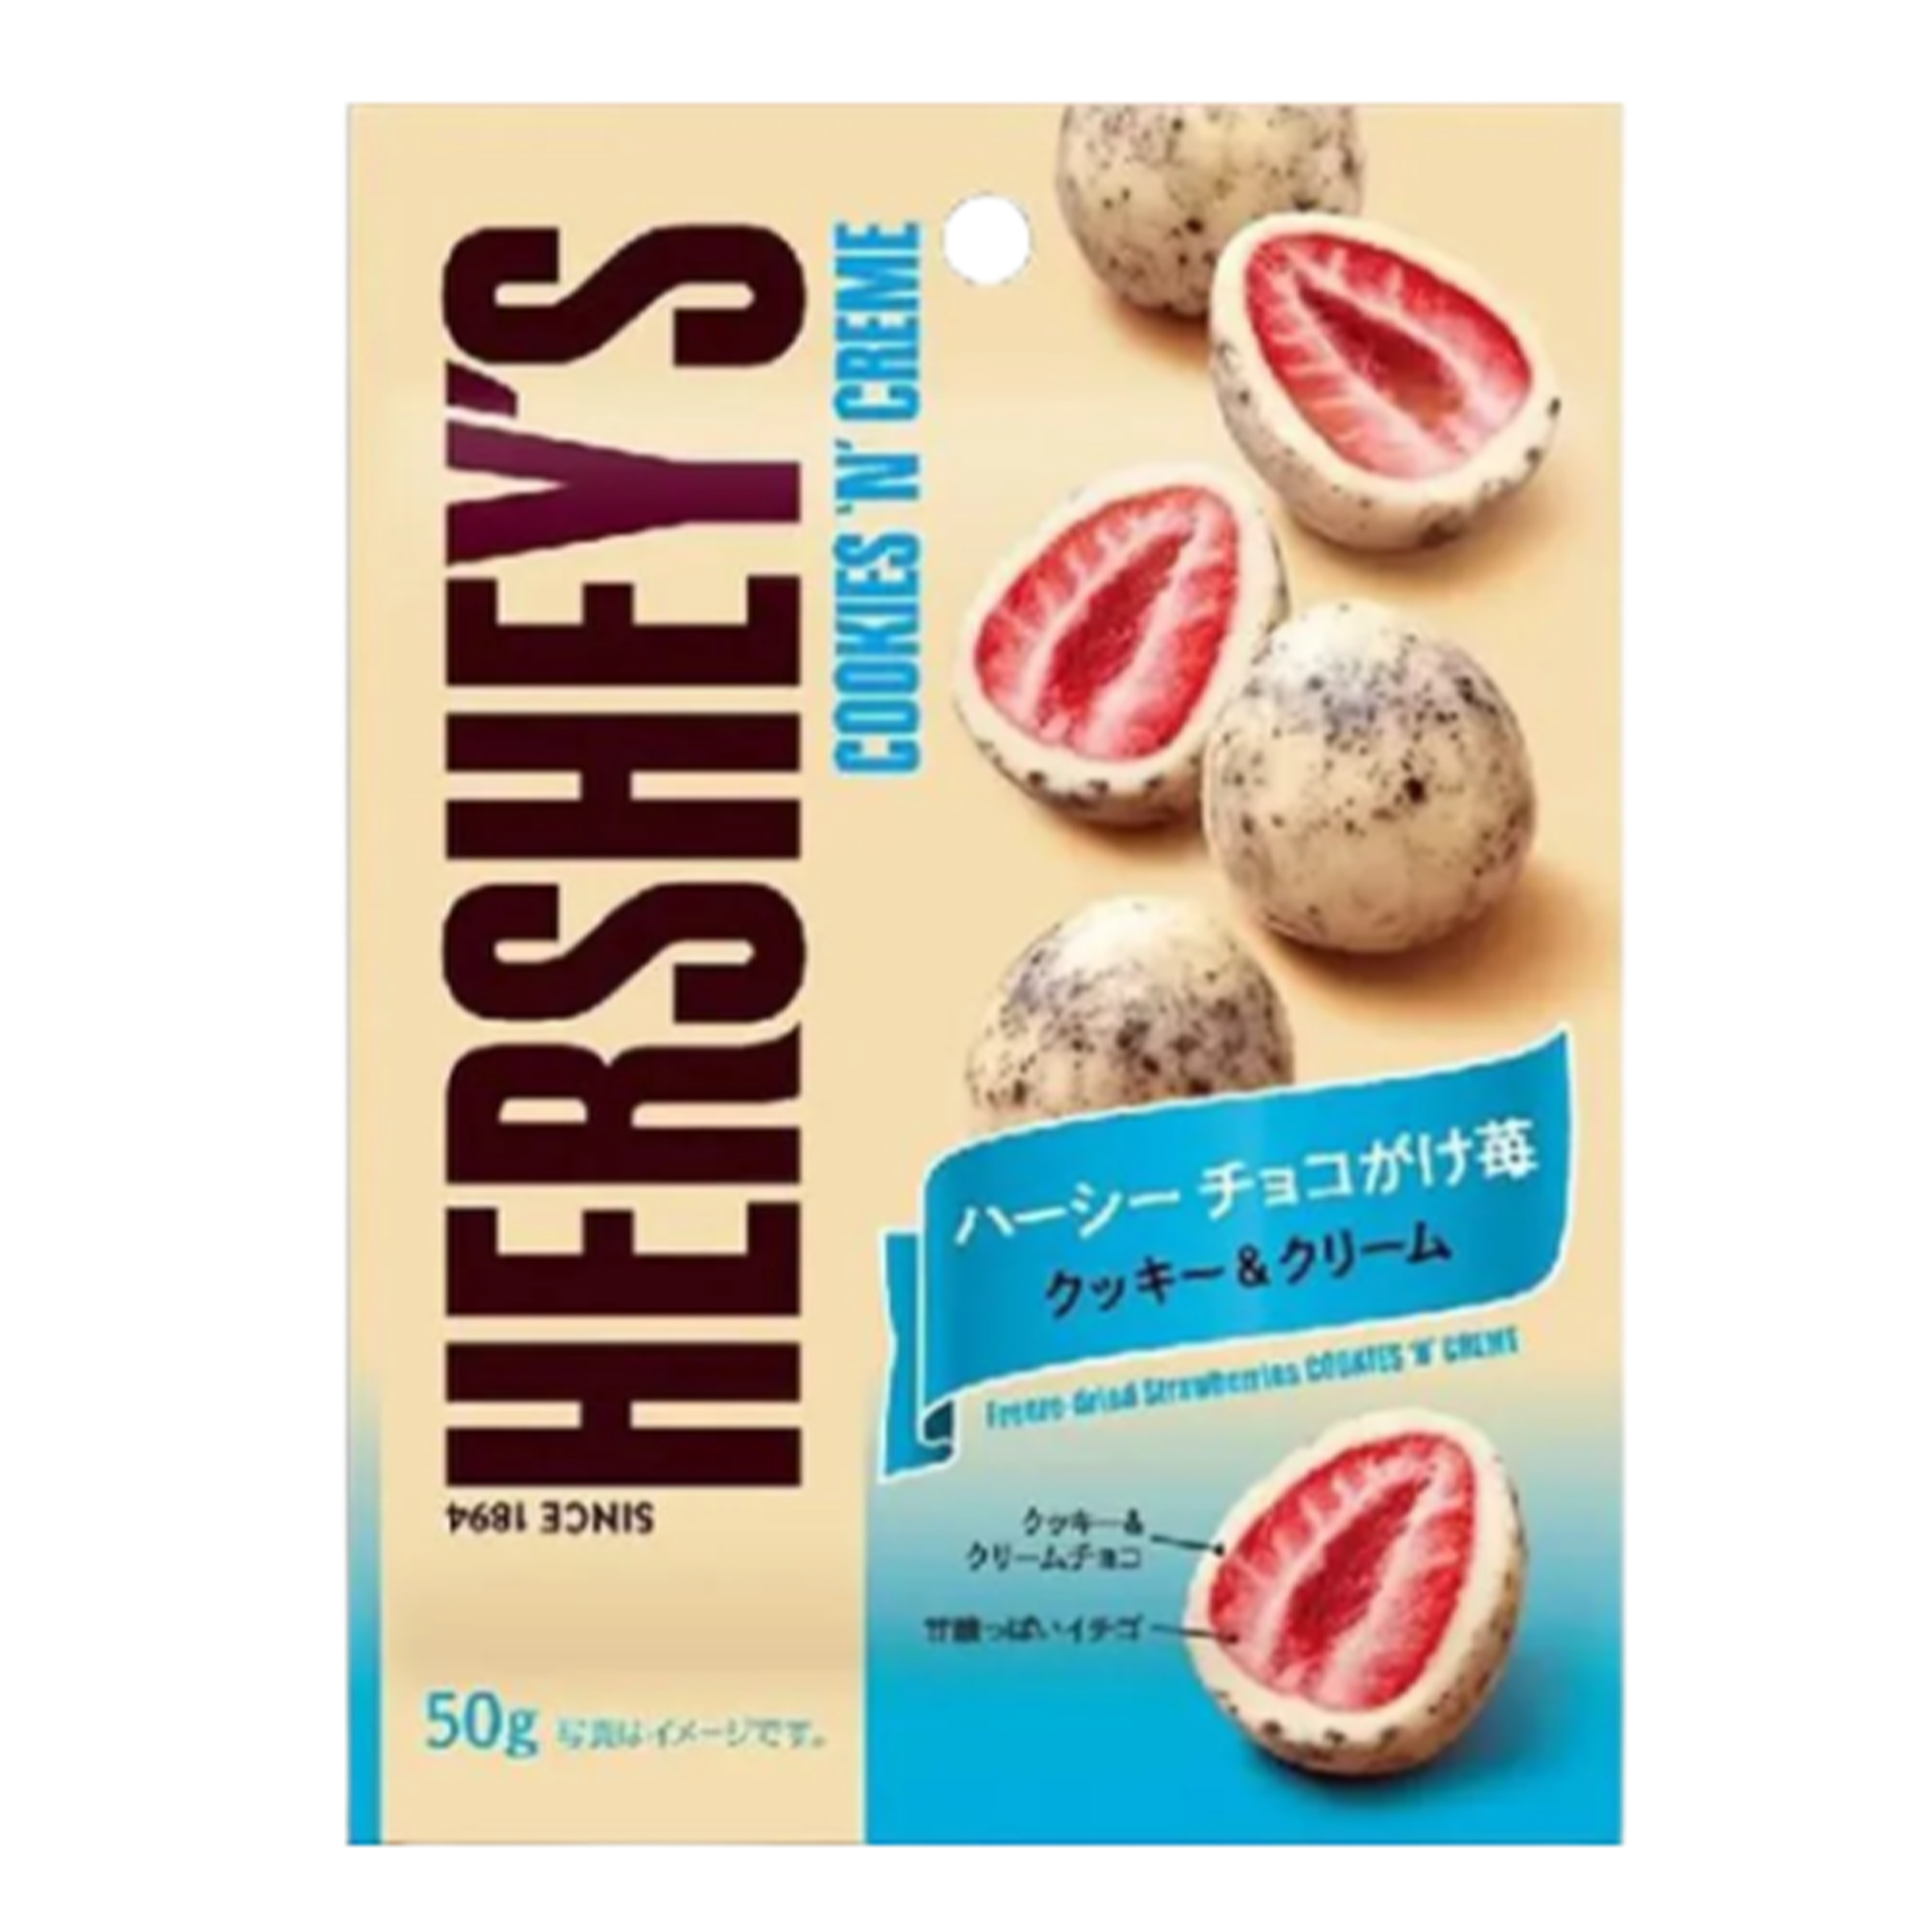 Hershey's Freeze Dried Strawberries - Cookies & Cream (Japan)